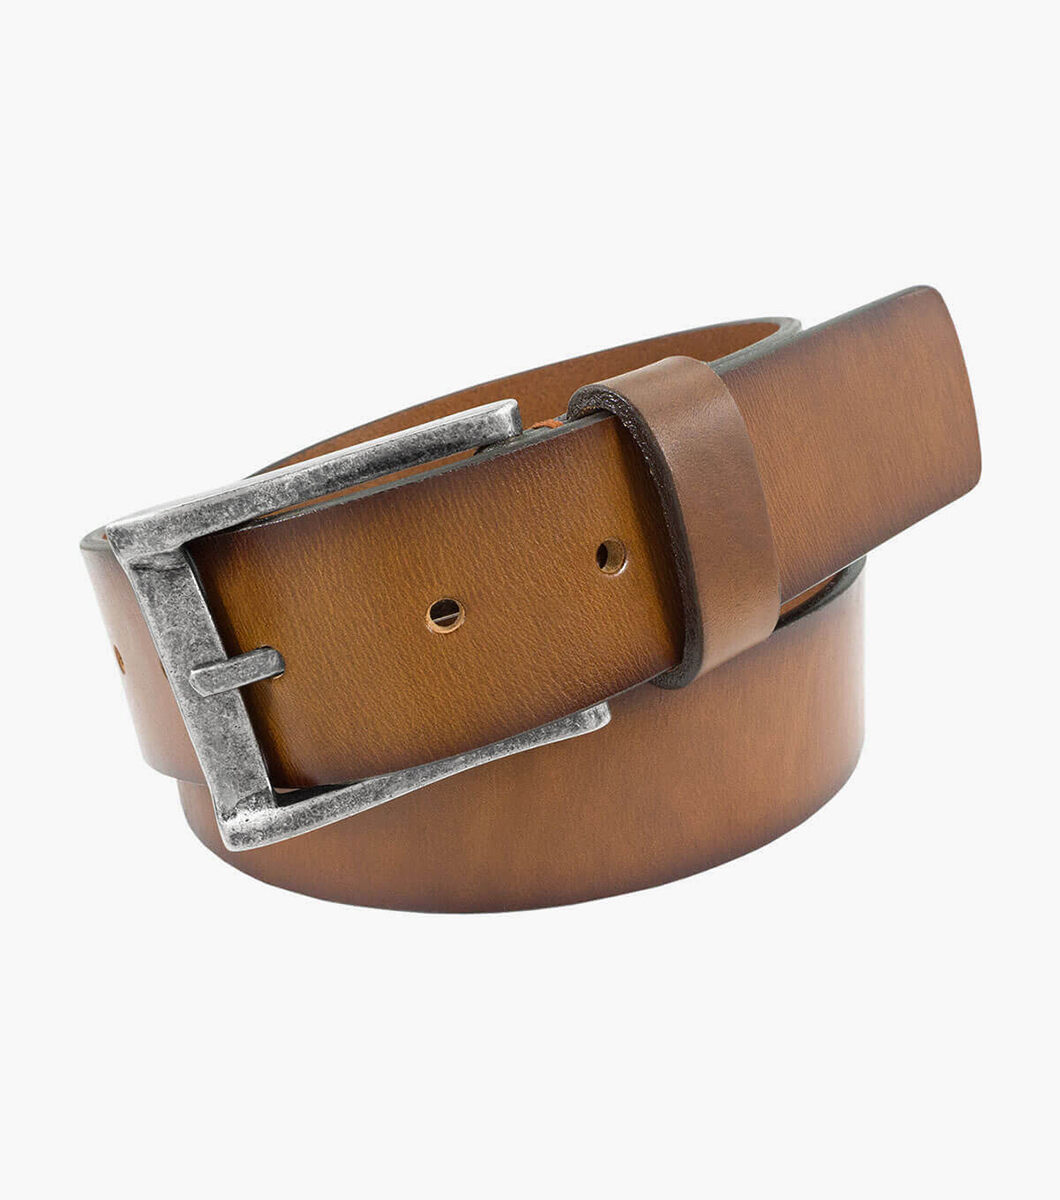 Florsheim Men's Albert 40mm Leather Belt